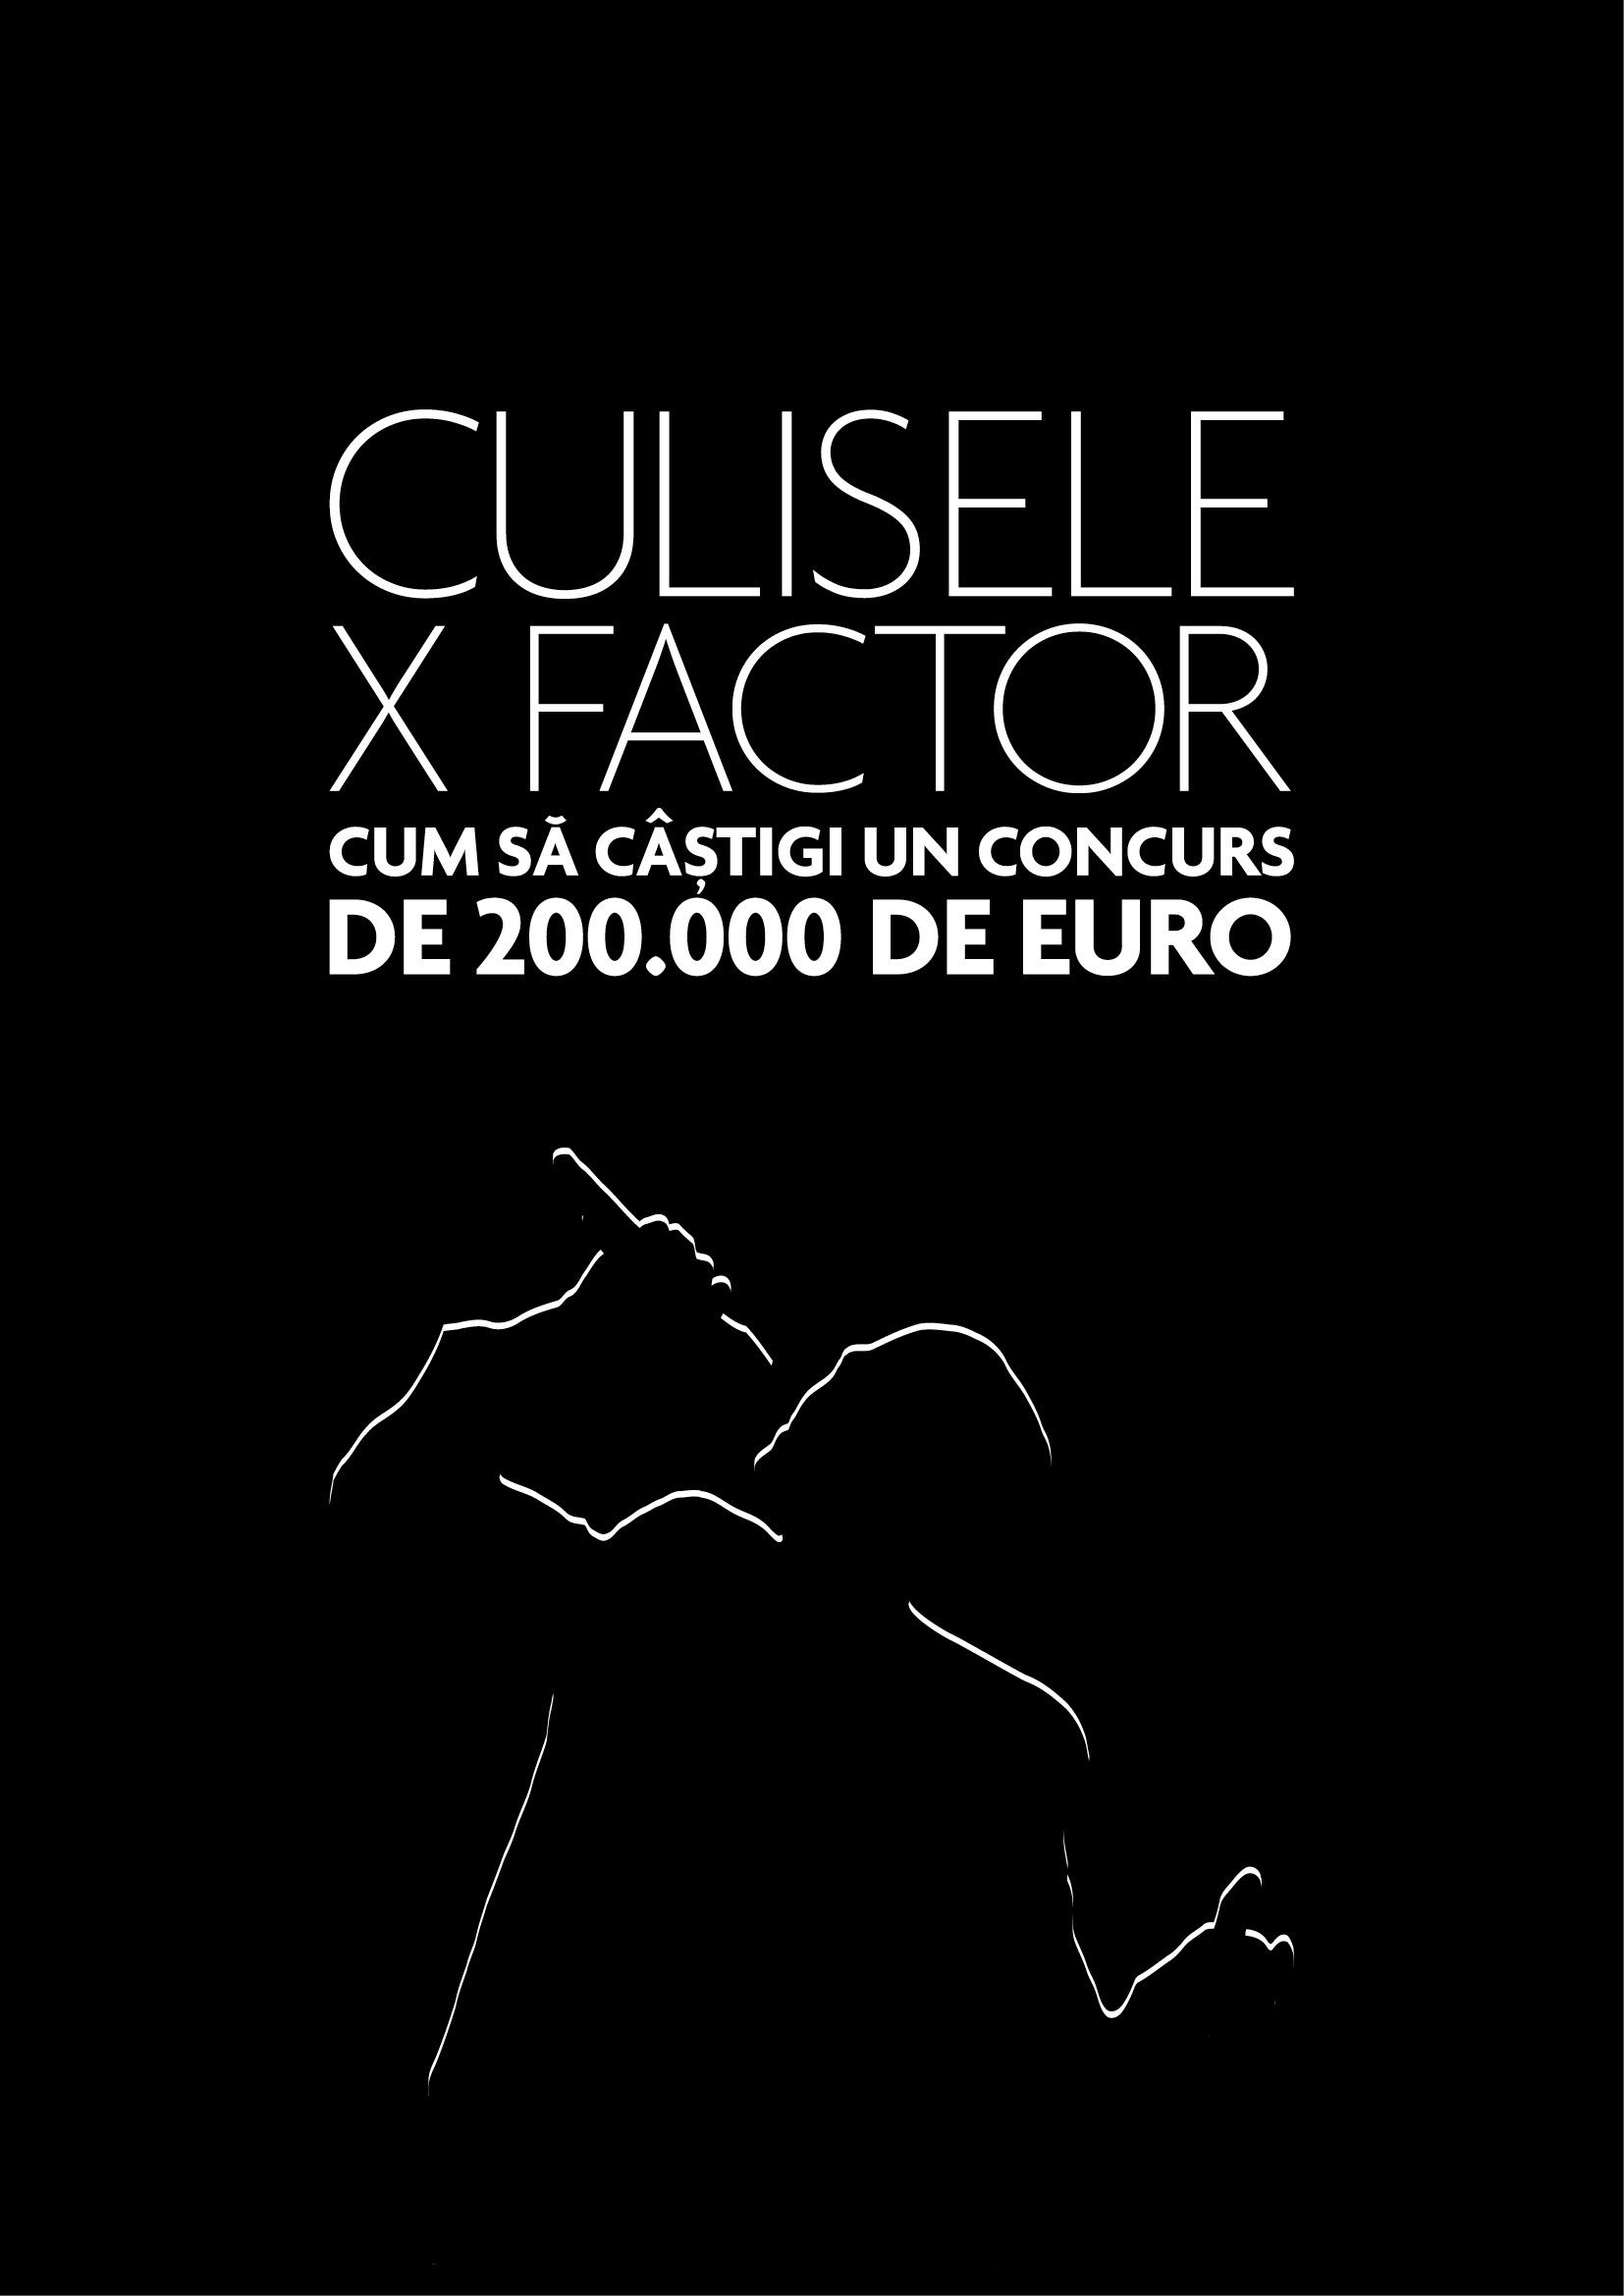 Lumea X Factor Romania, dezvaluita in cartea 